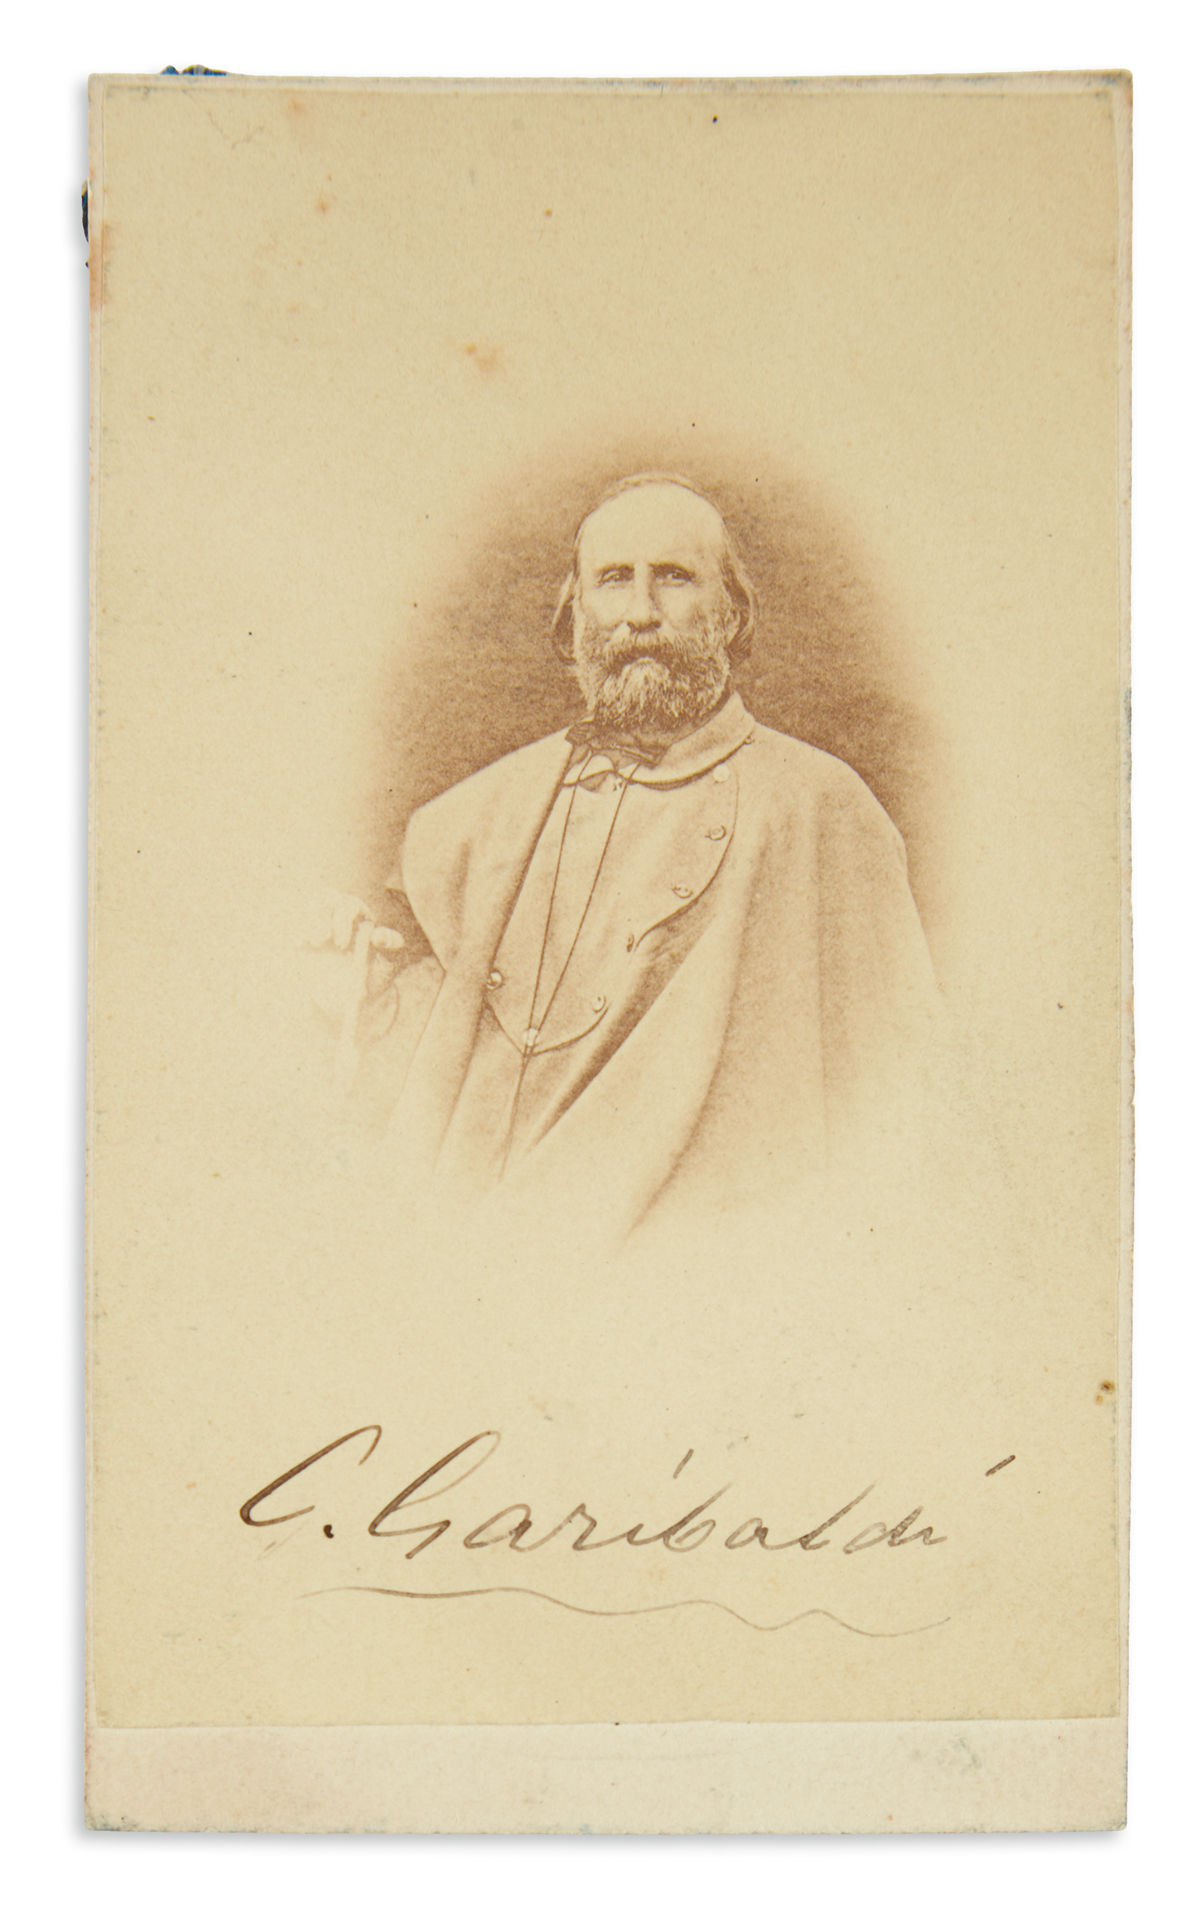 GARIBALDI, GIUSEPPE. Photograph Signed, G. Garibaldi, carte-de-visite bust portrait by Alessandro Pavia,